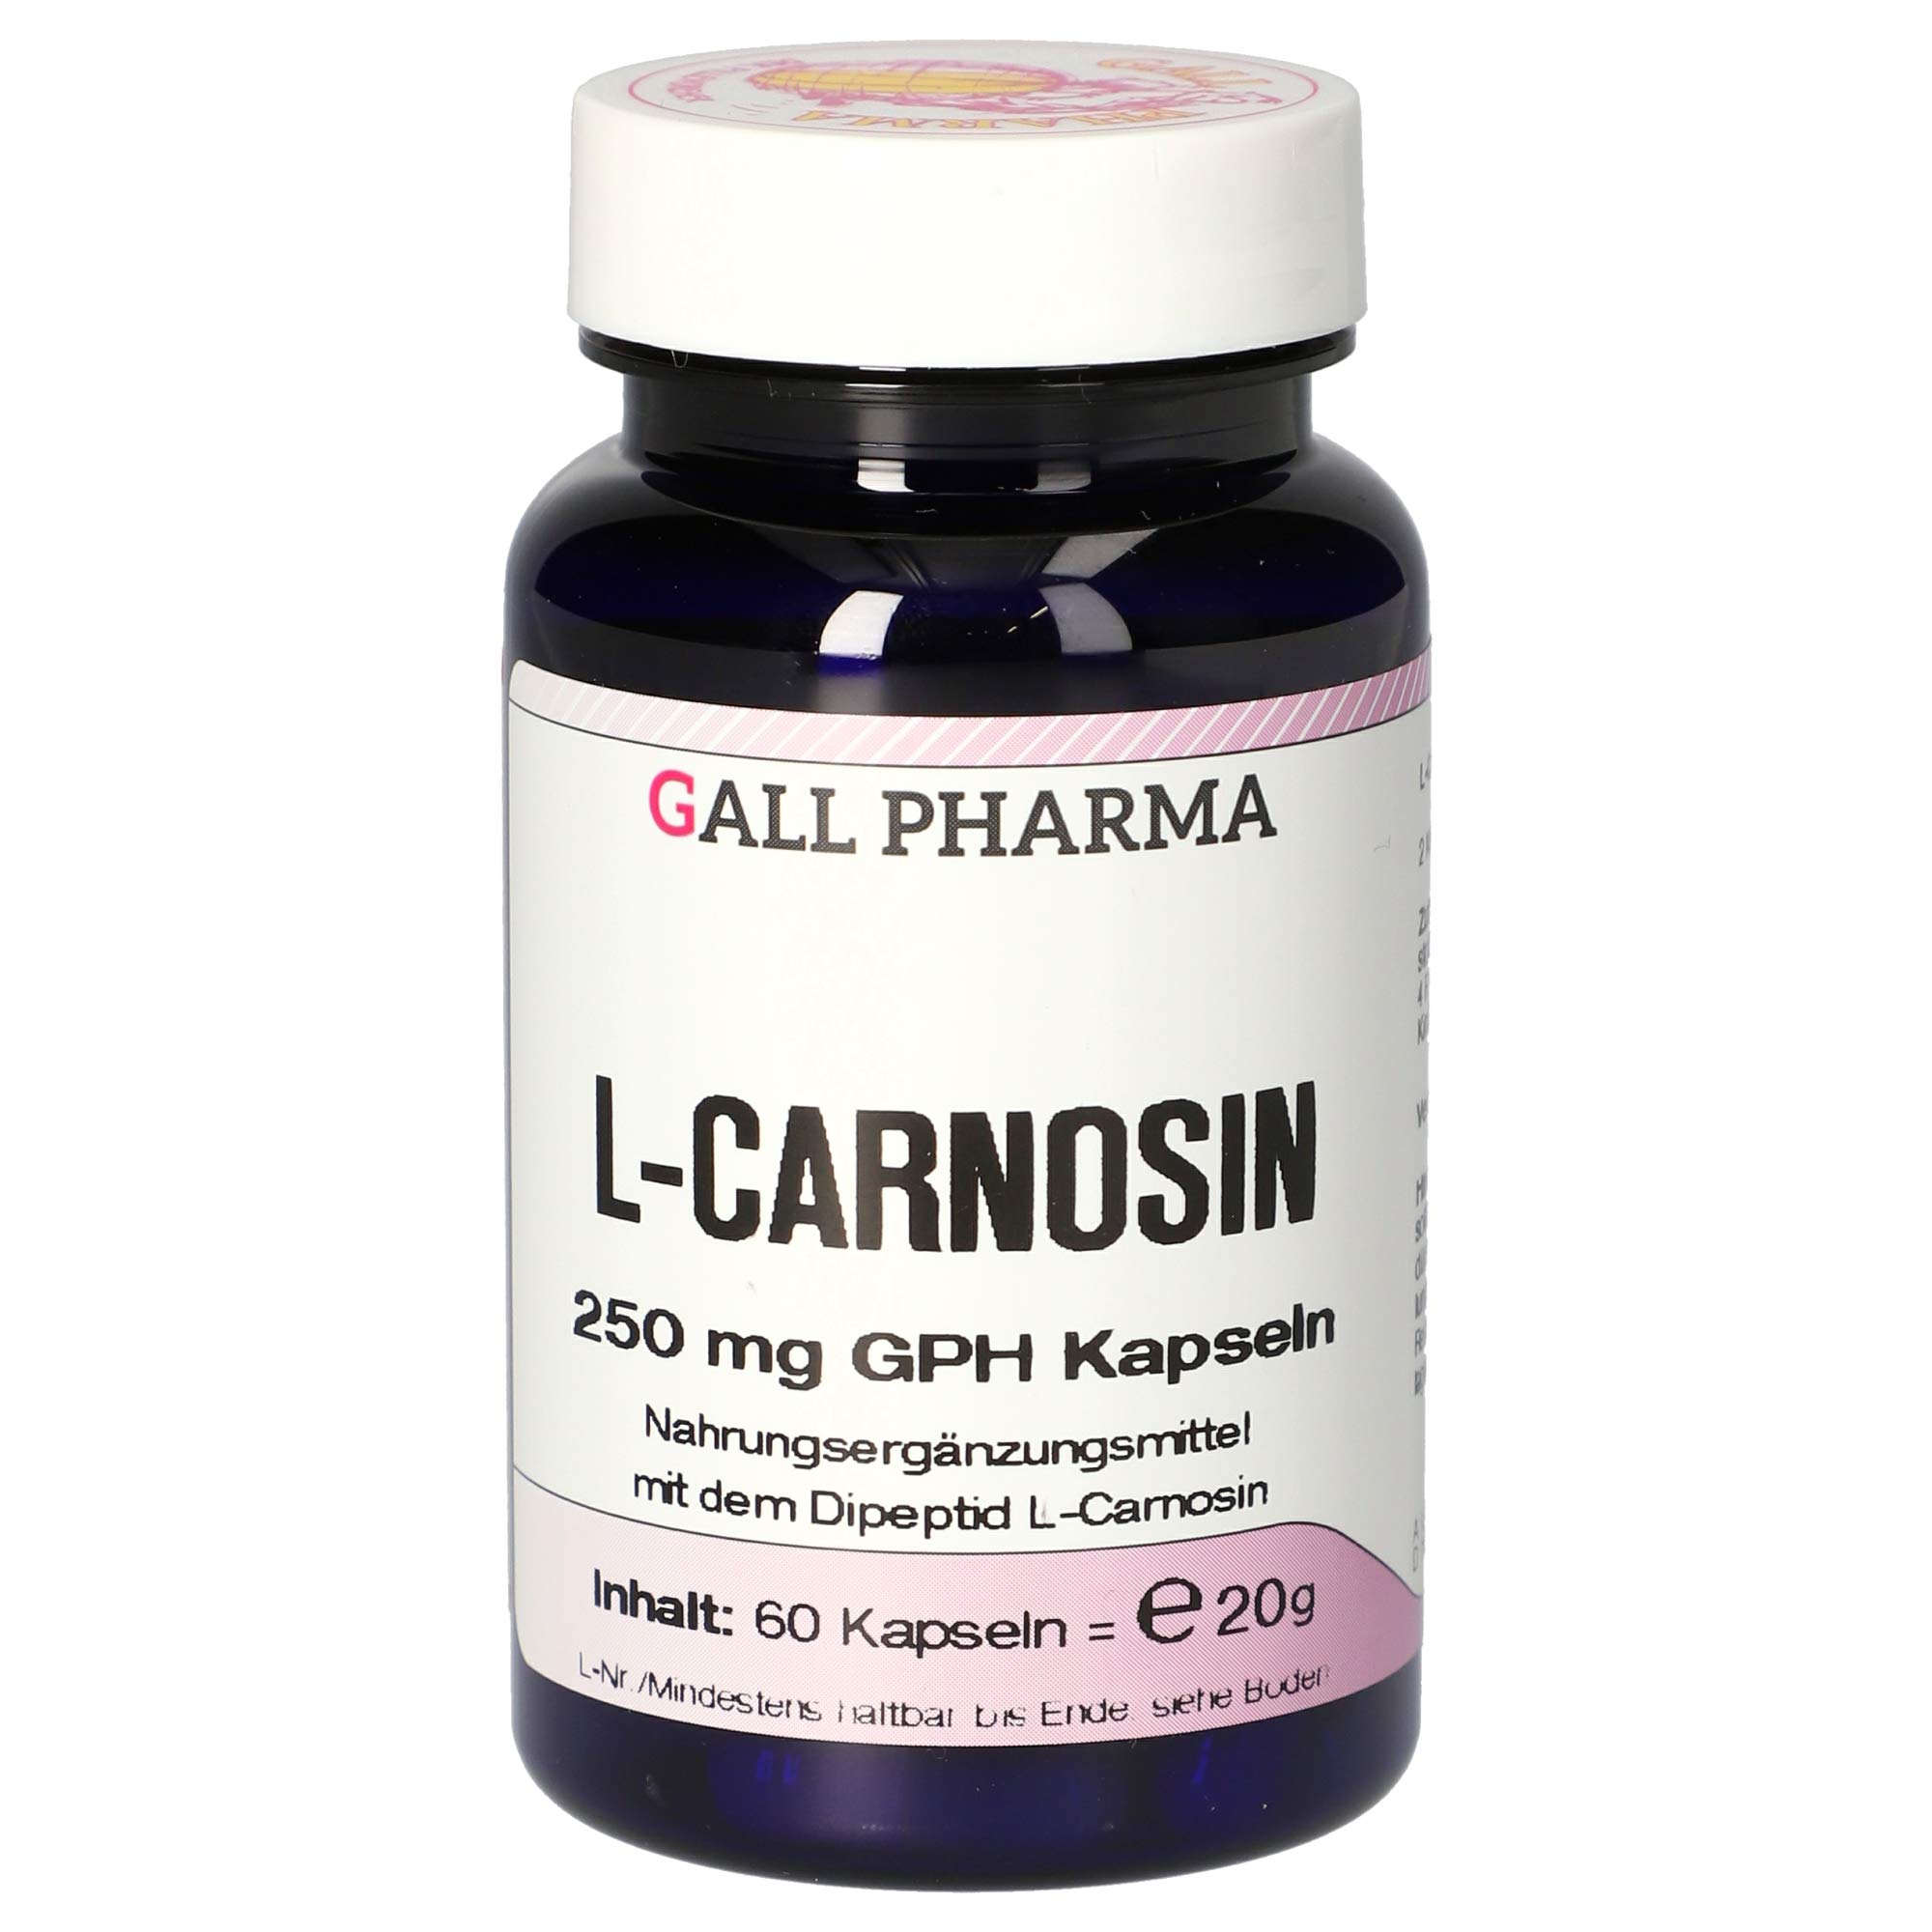 Gall Pharma L-Carnosin 250 mg GPH Kapseln, 1er Pack (1 x 60 Stück)